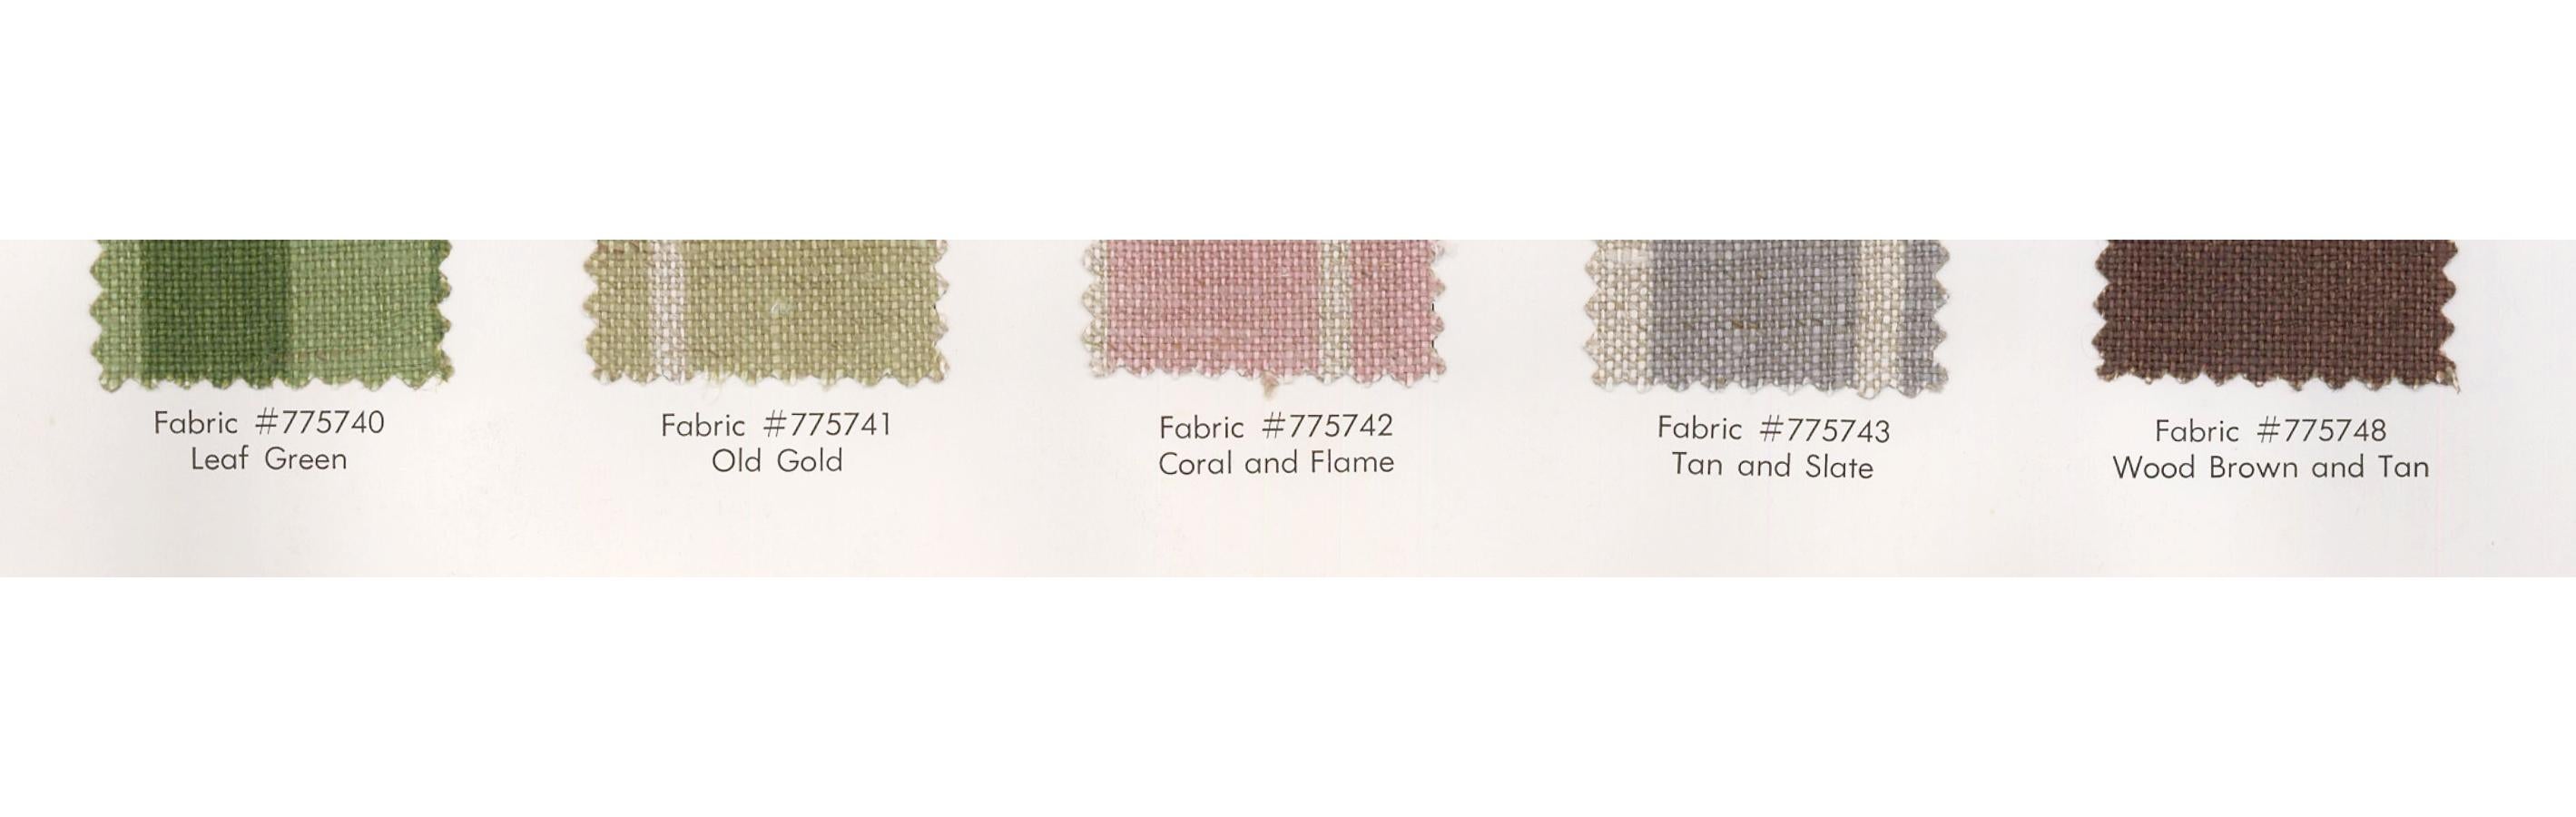 Design 102 Fabric Sample Colorways - Modern Mixed Media Art by Frank Lloyd Wright